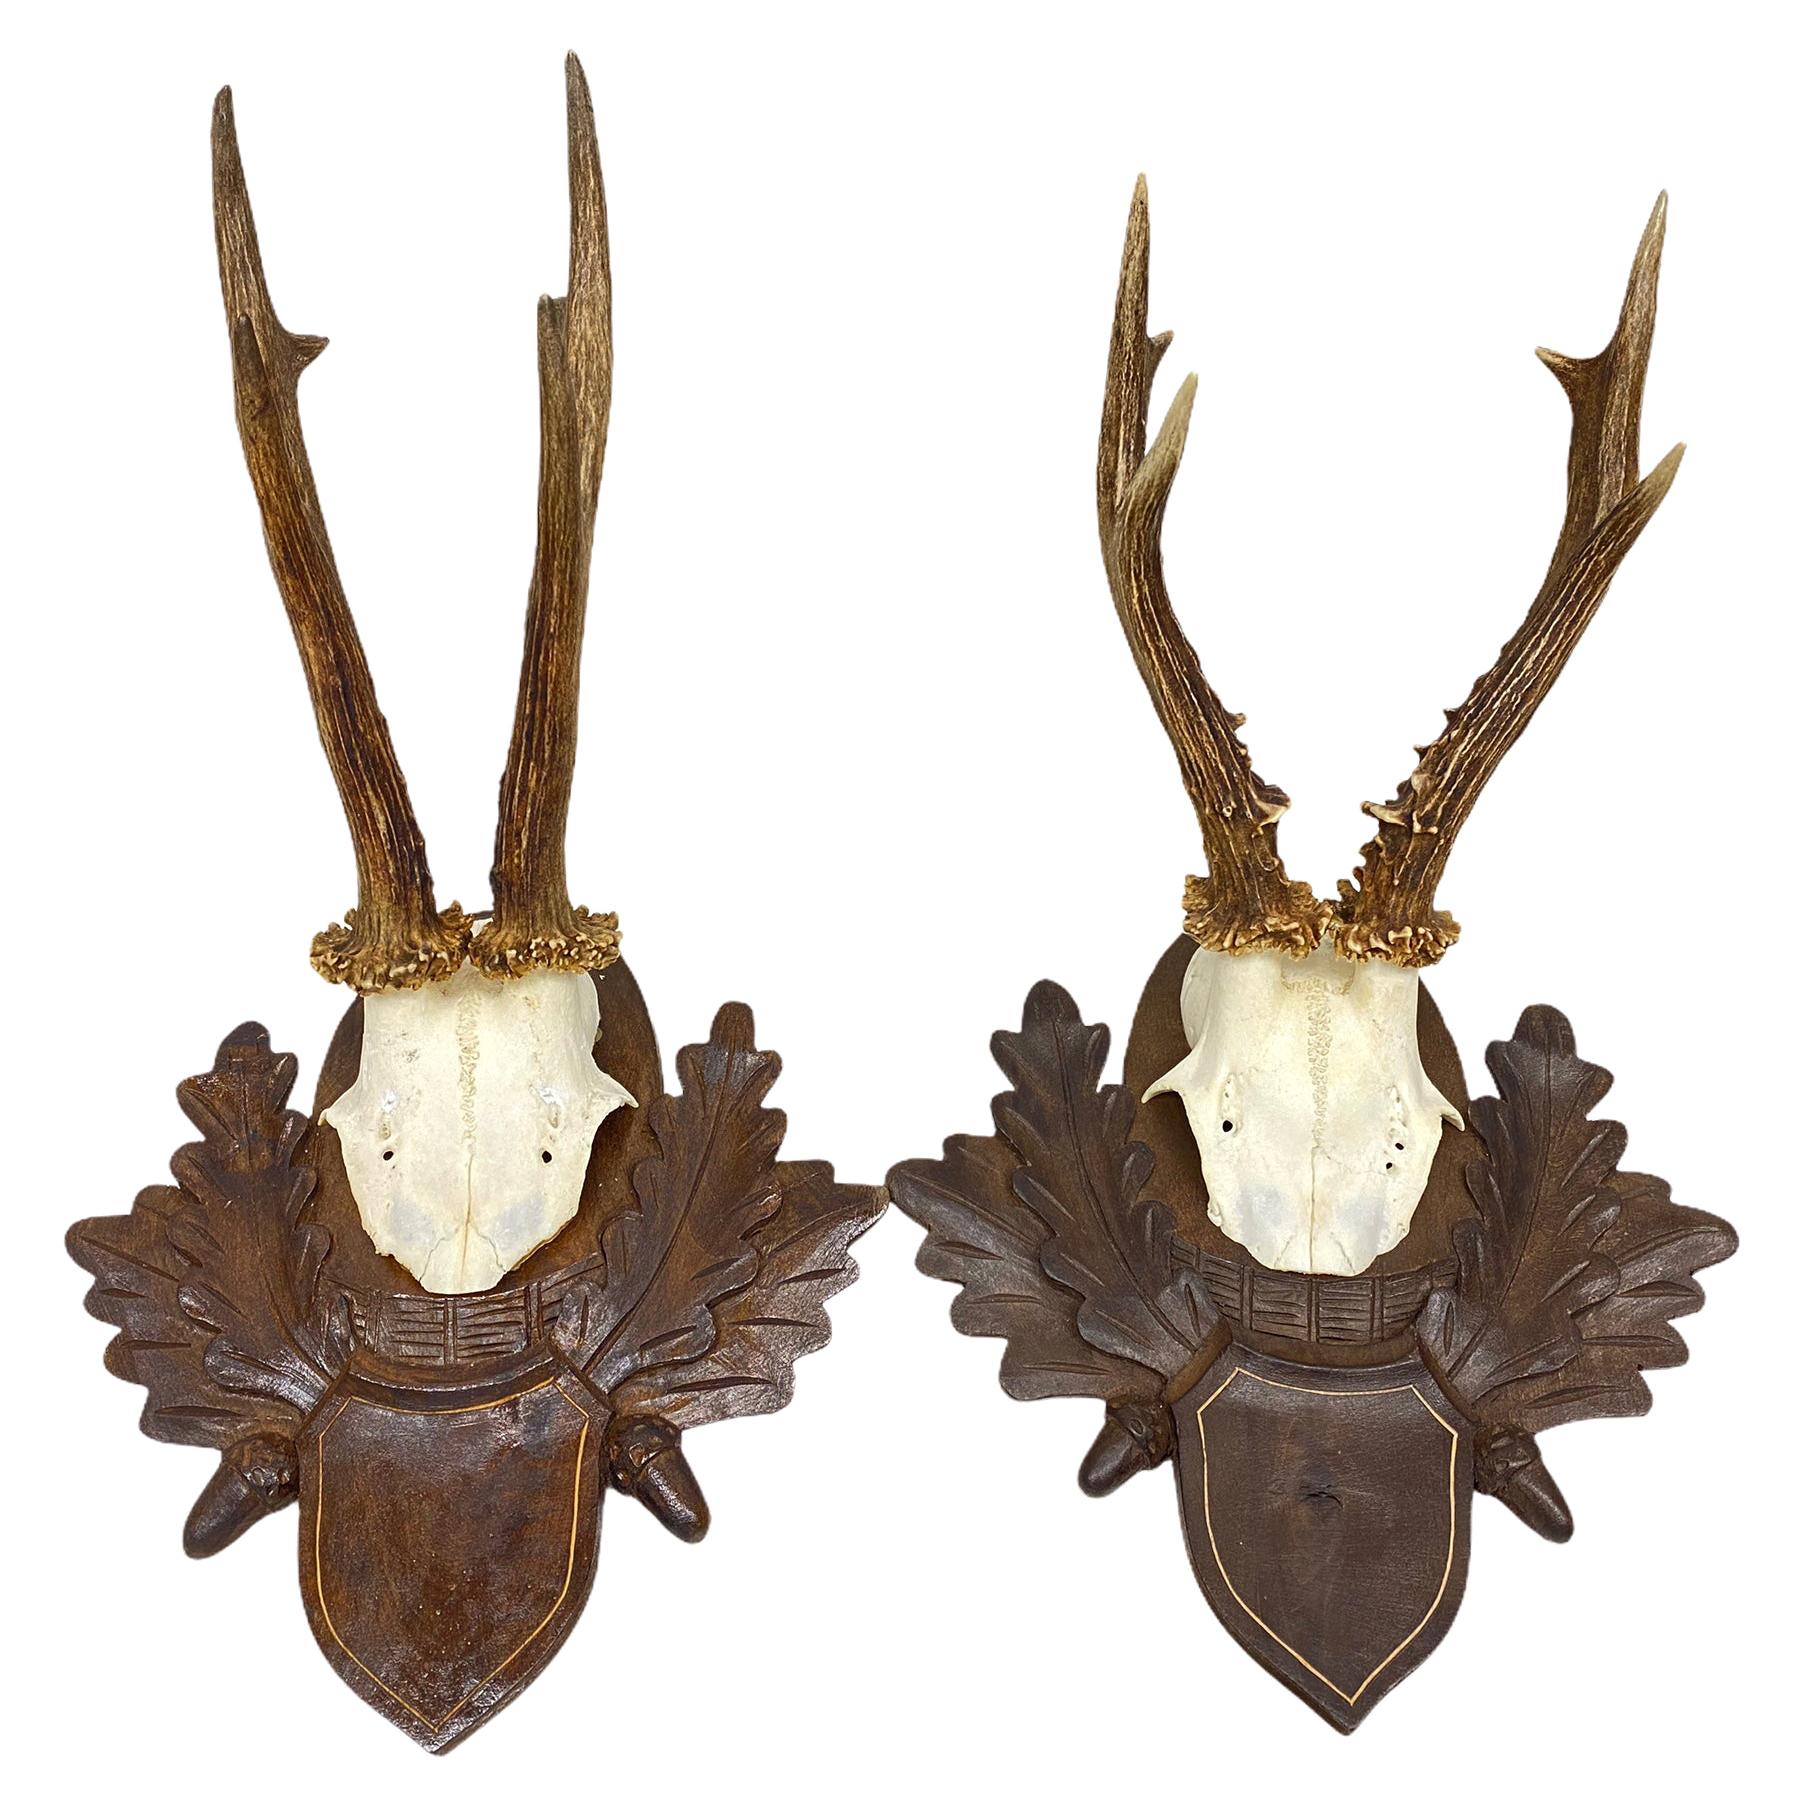 Two Deer Antler Mount Trophy on Black Forest Carved Wood Plaque from Austria